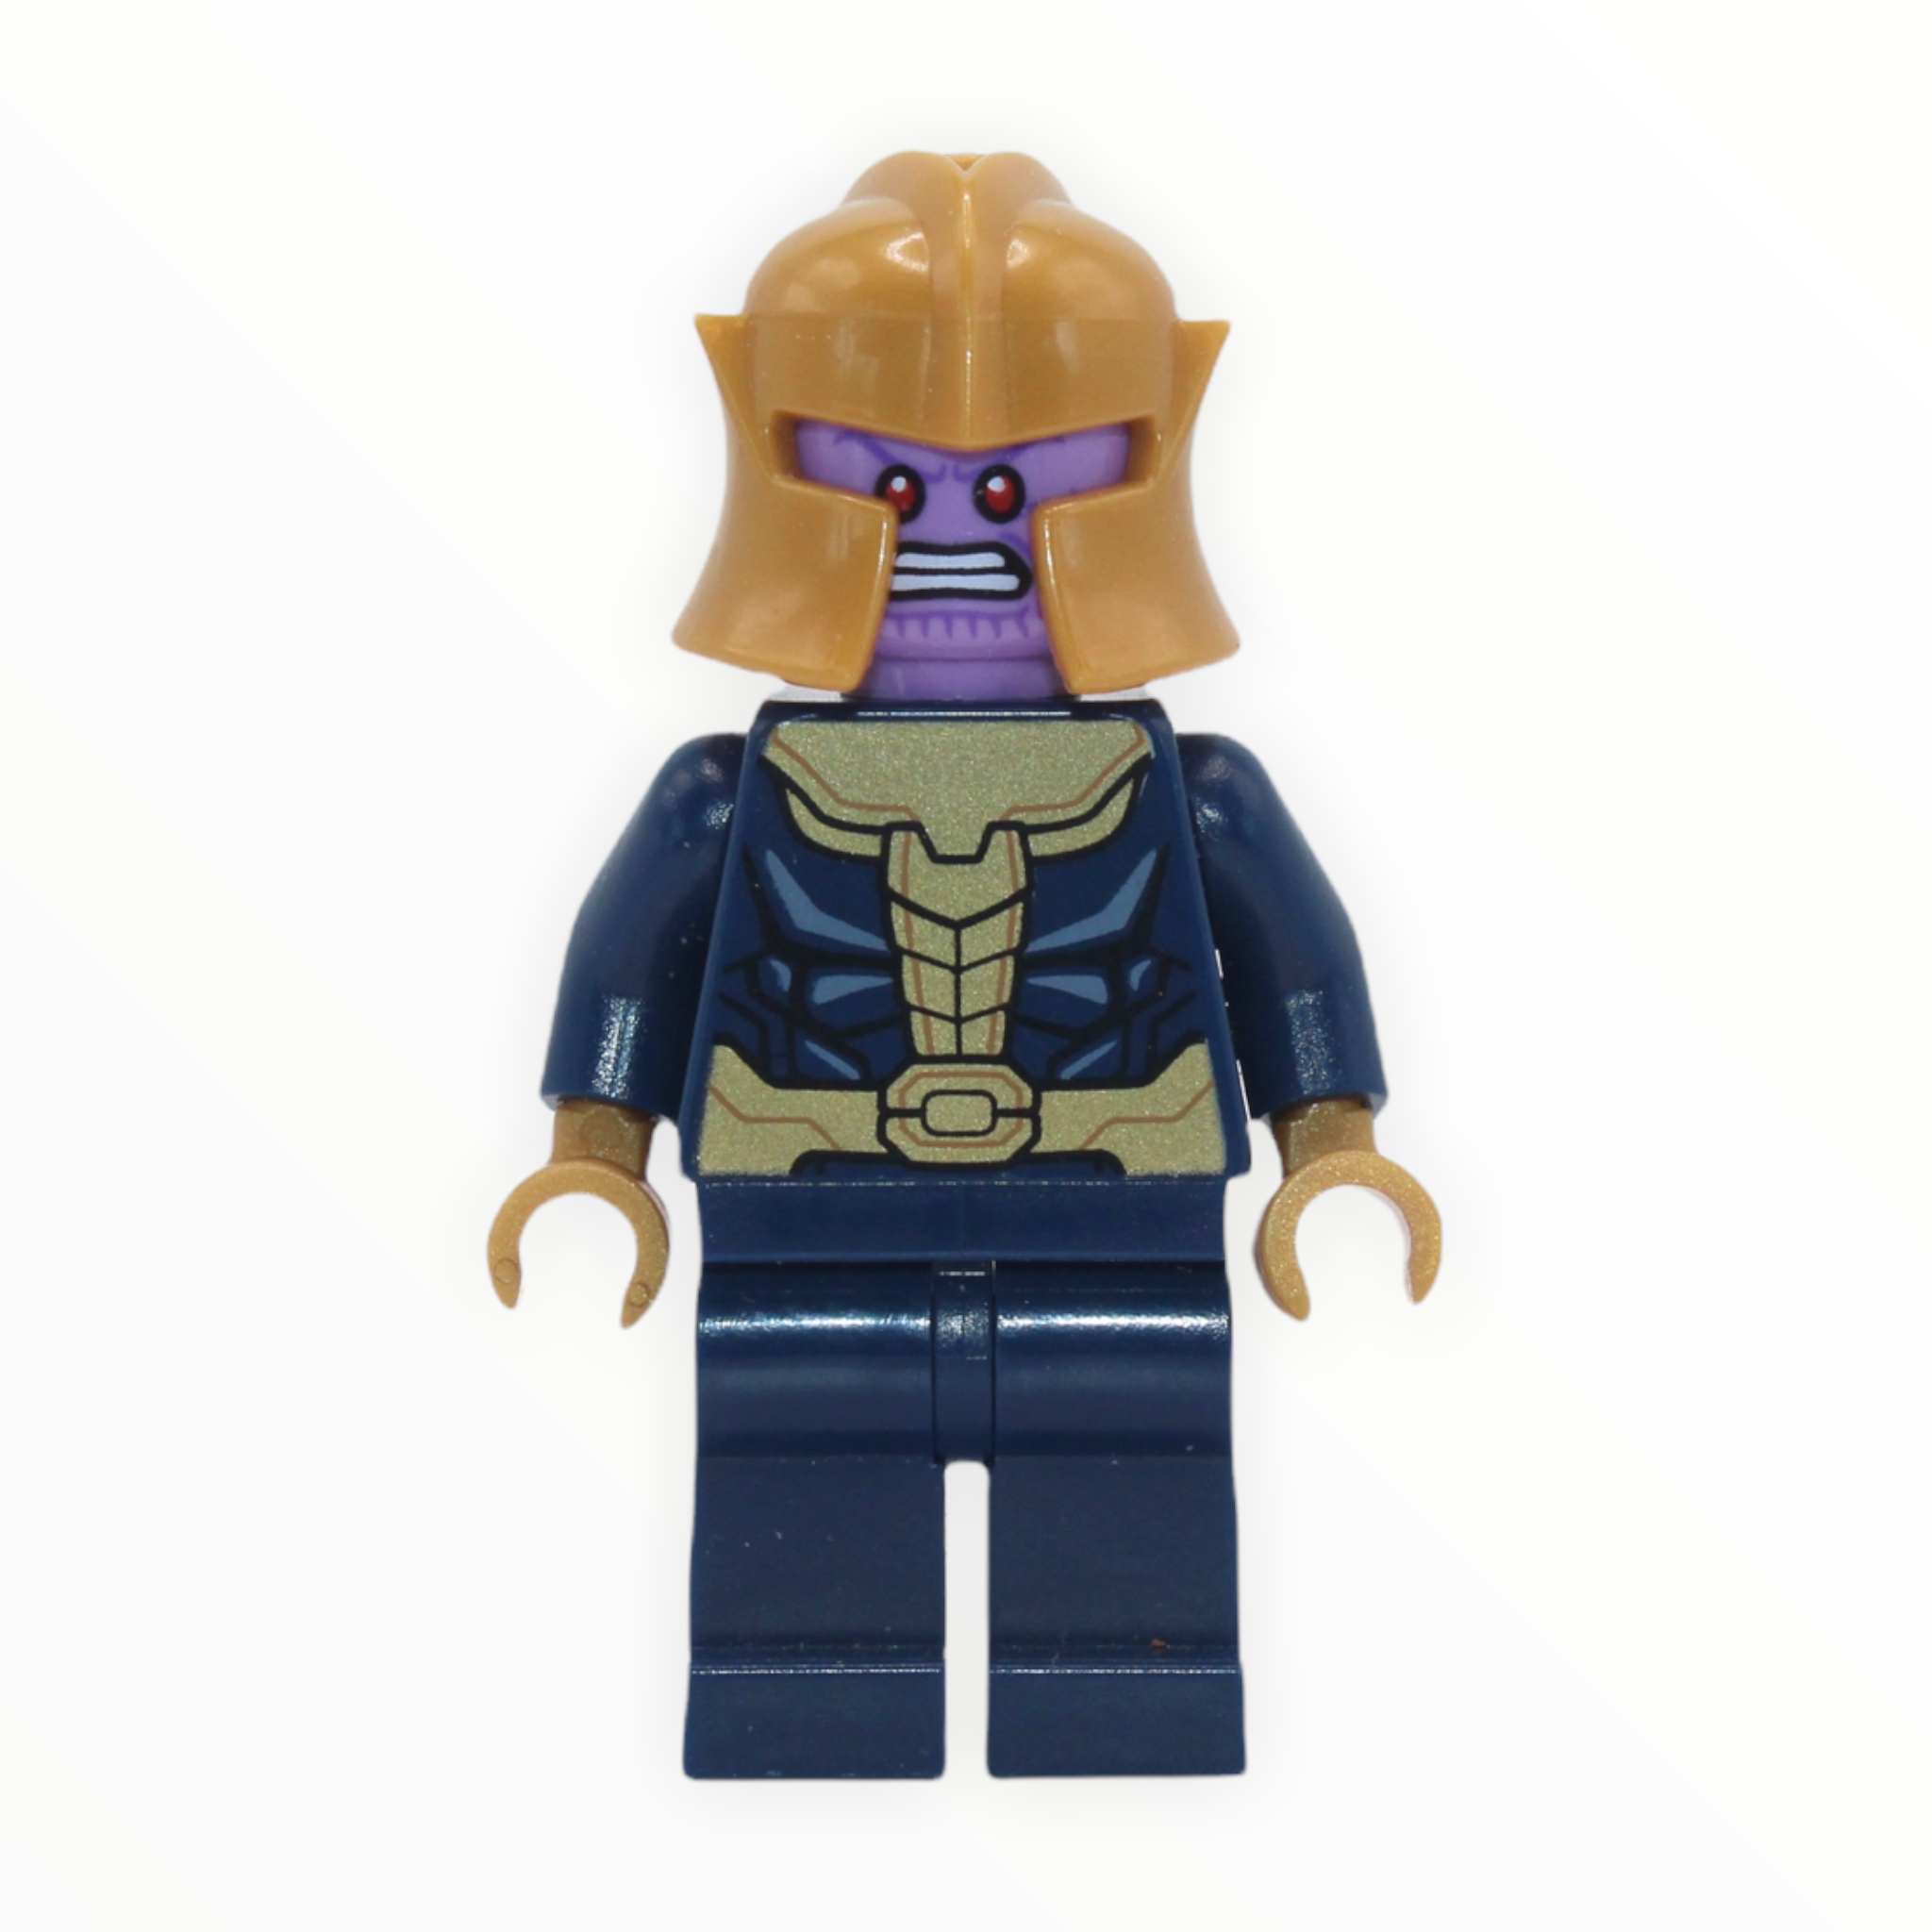 Lego MINIFIGURE Lego Marvel Avengers Thanos Short Blue Legs 